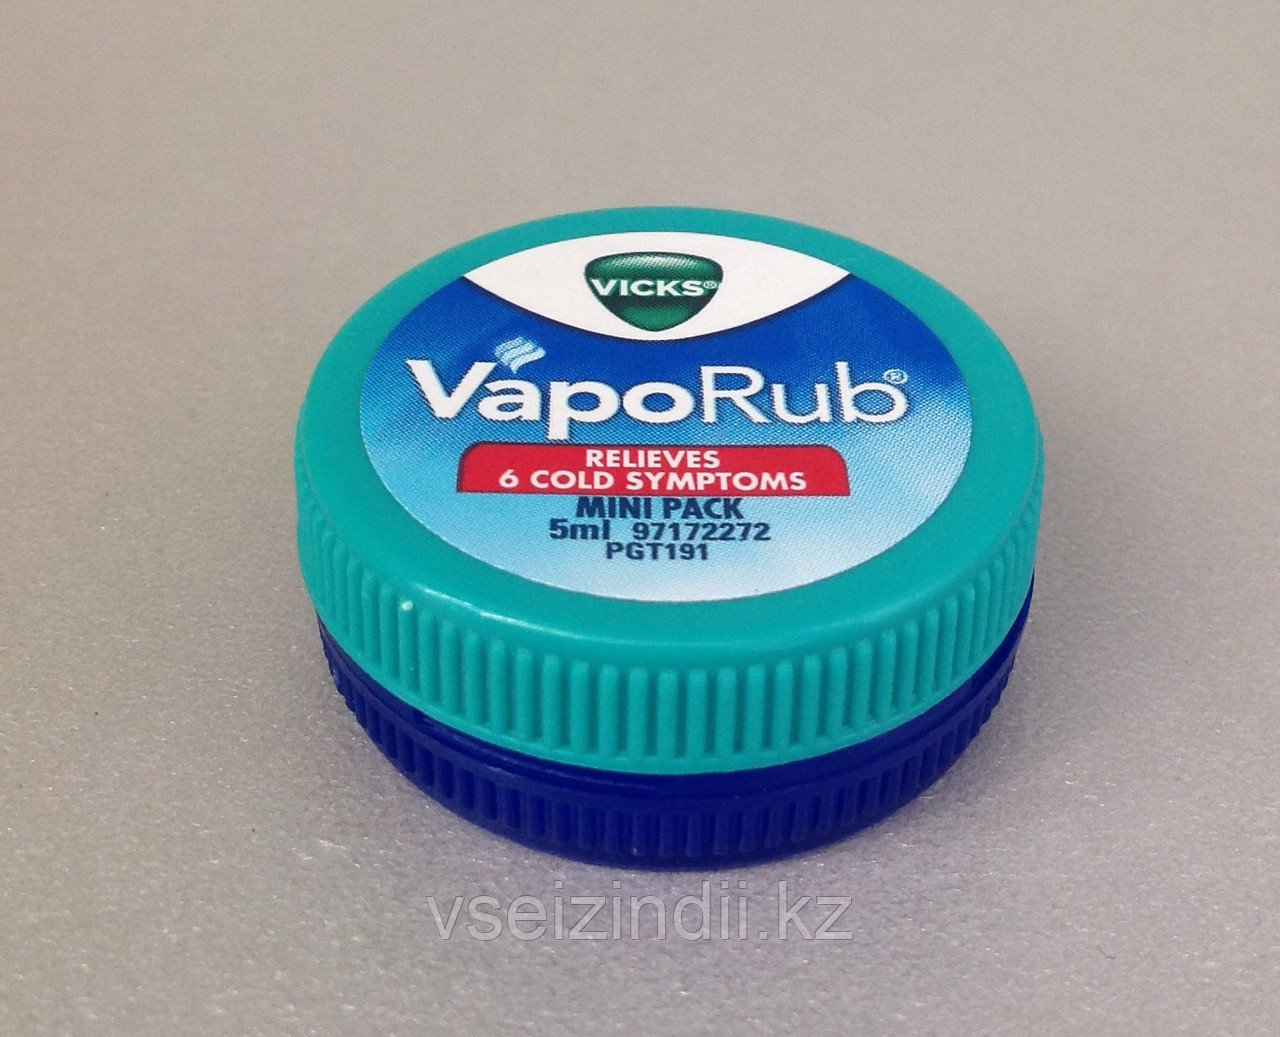 Вапораб, Лечебный бальзам от простуды "VapoRub"- 5 гр